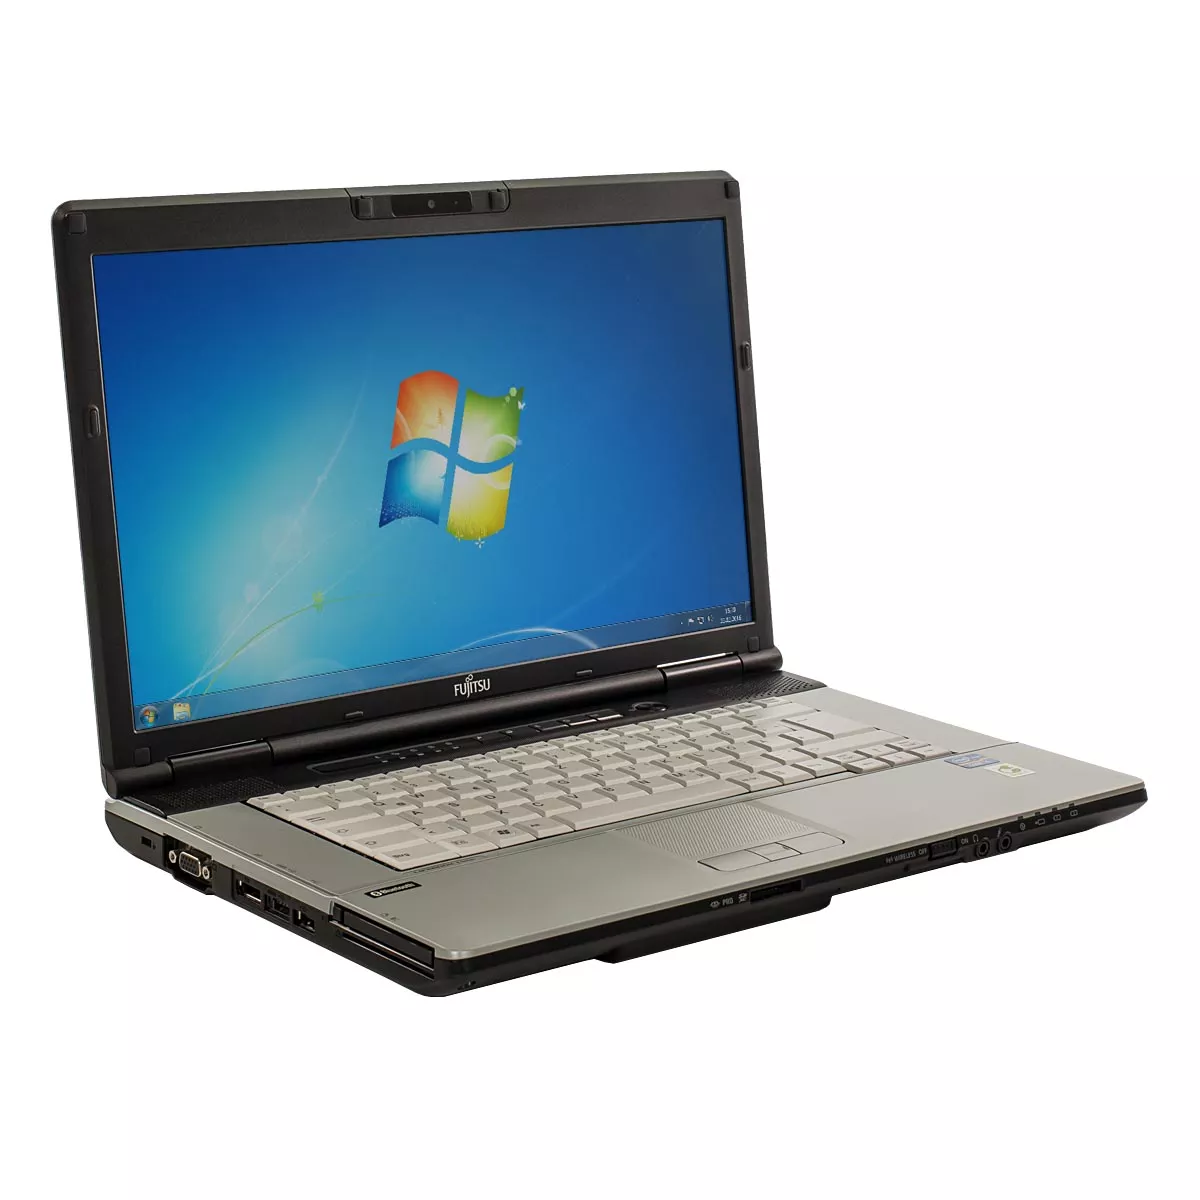 Fujitsu Lifebook E751 Core i5 2520M 2,50 GHz 240 GB SSD Webcam